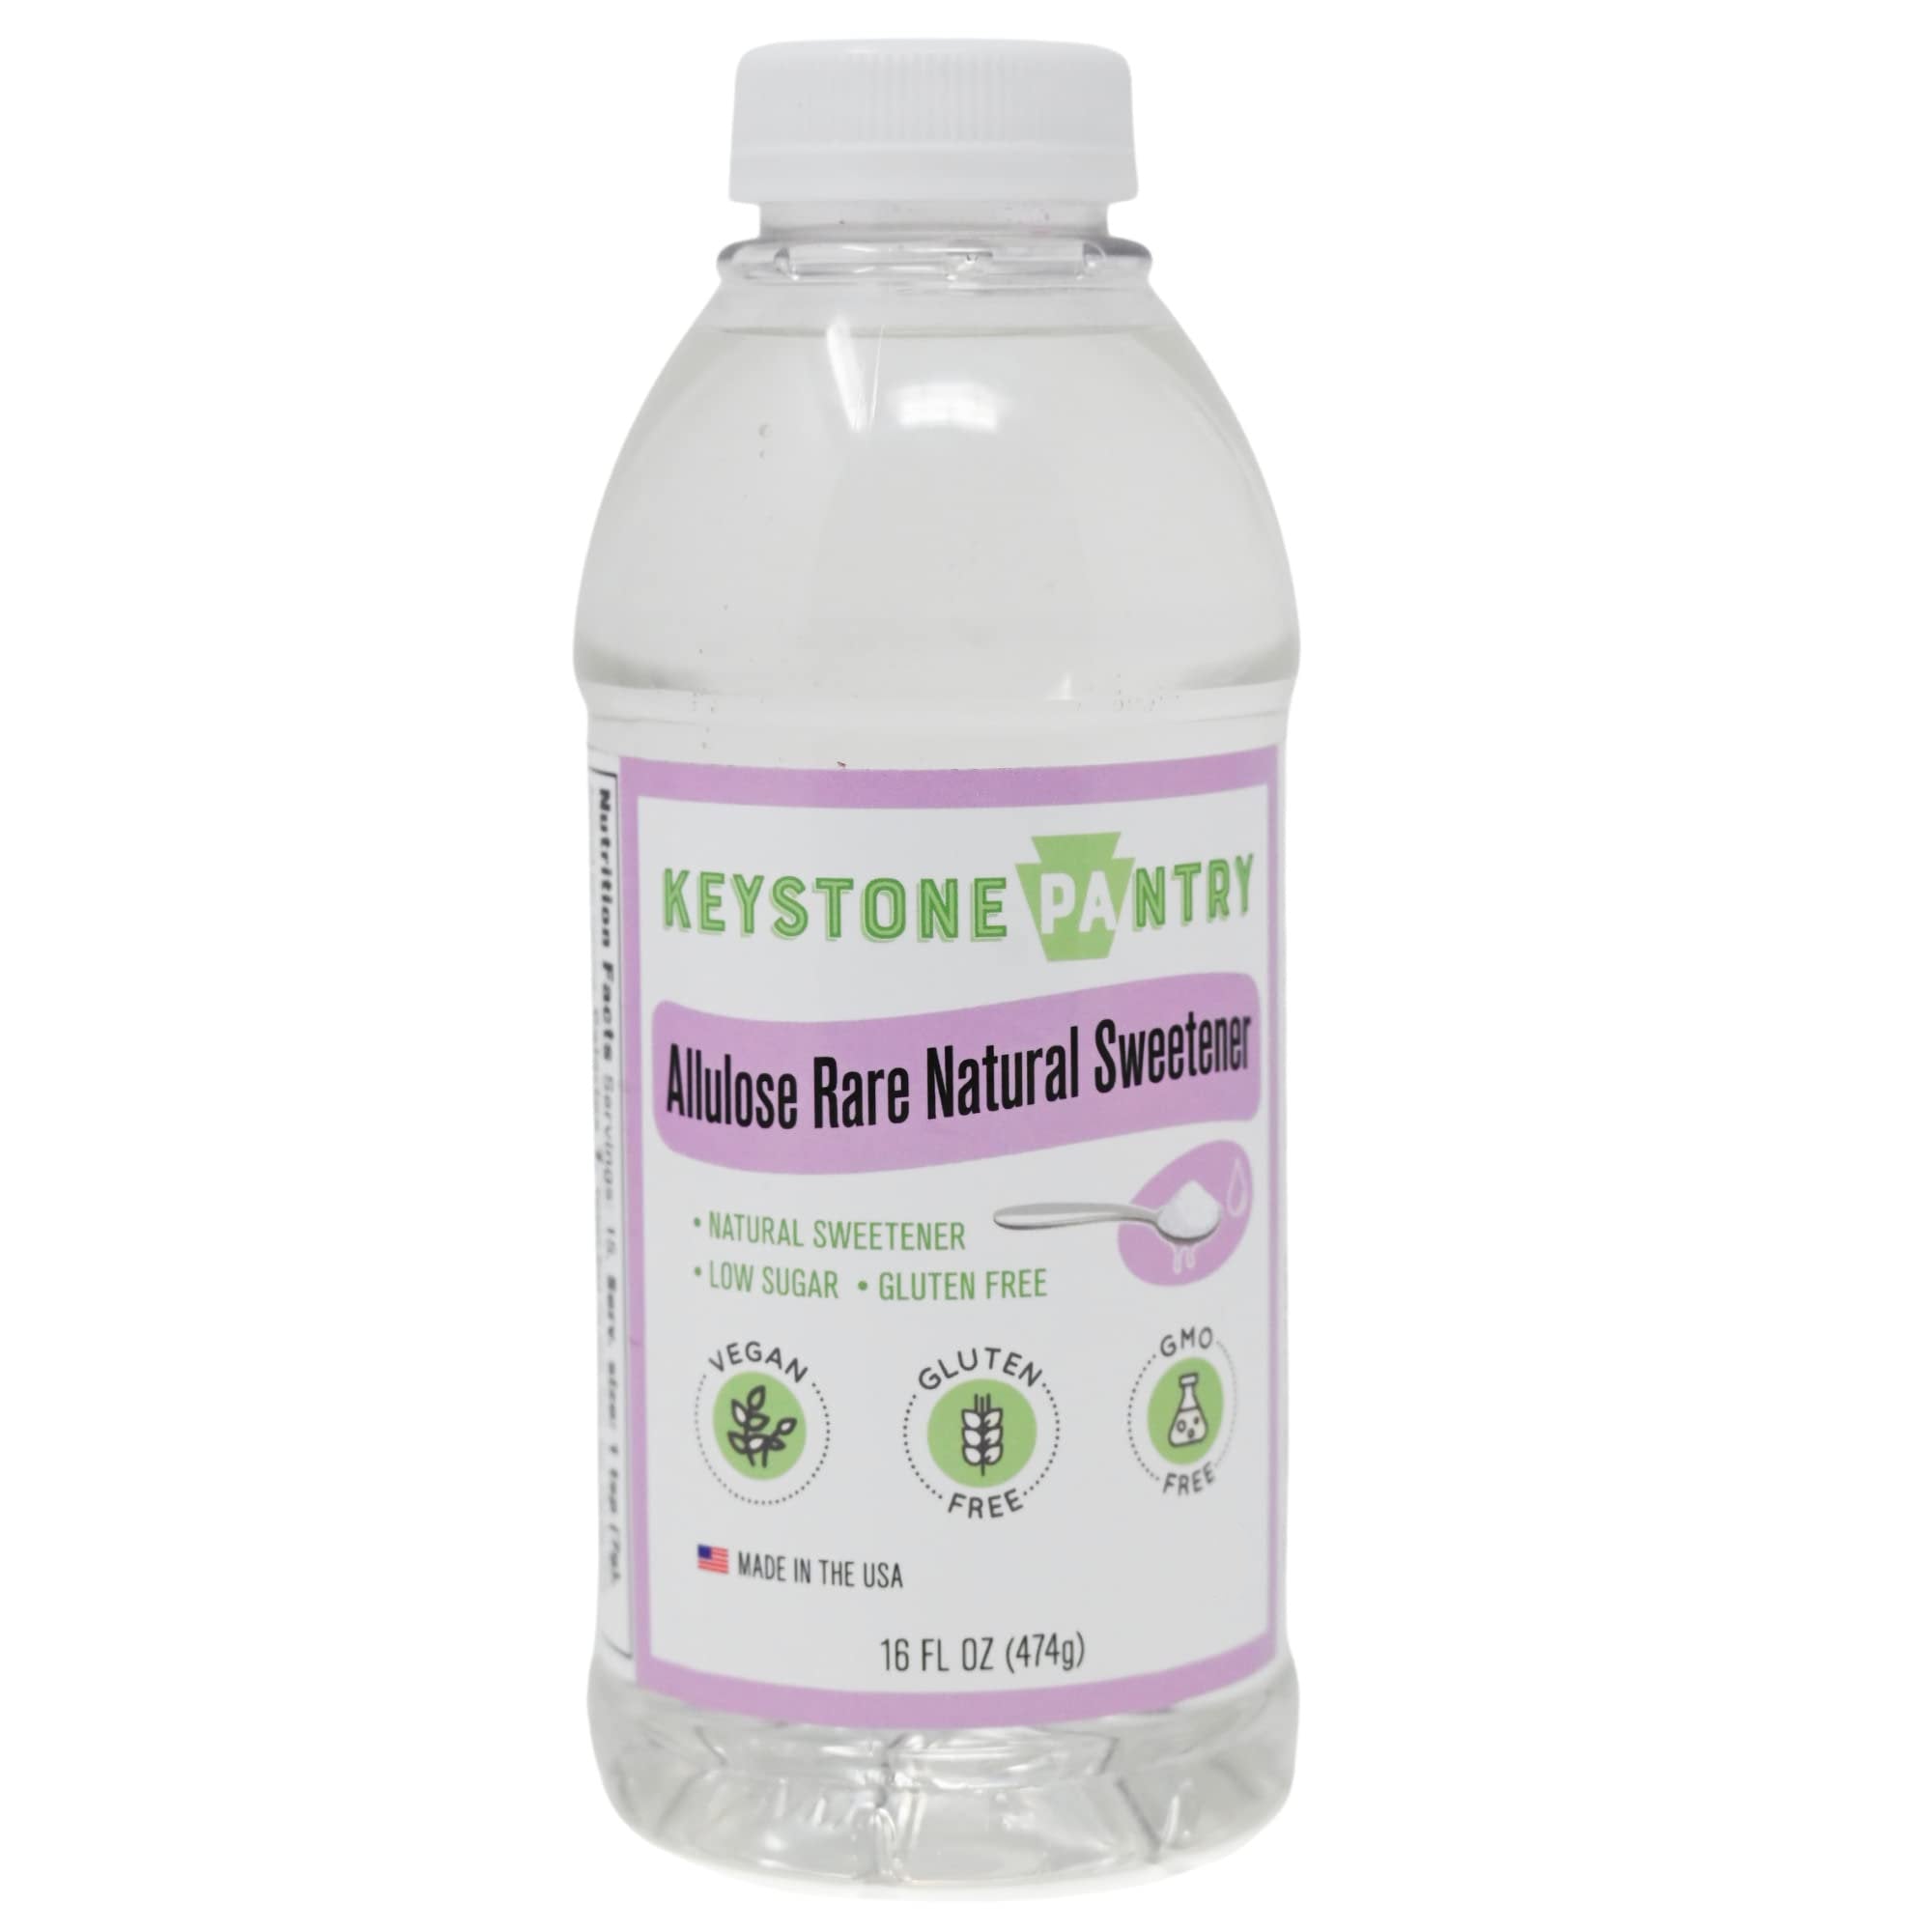 Keystone Pantry Allulose Rare Natural Sweetener 1 pint Vegan Friendly